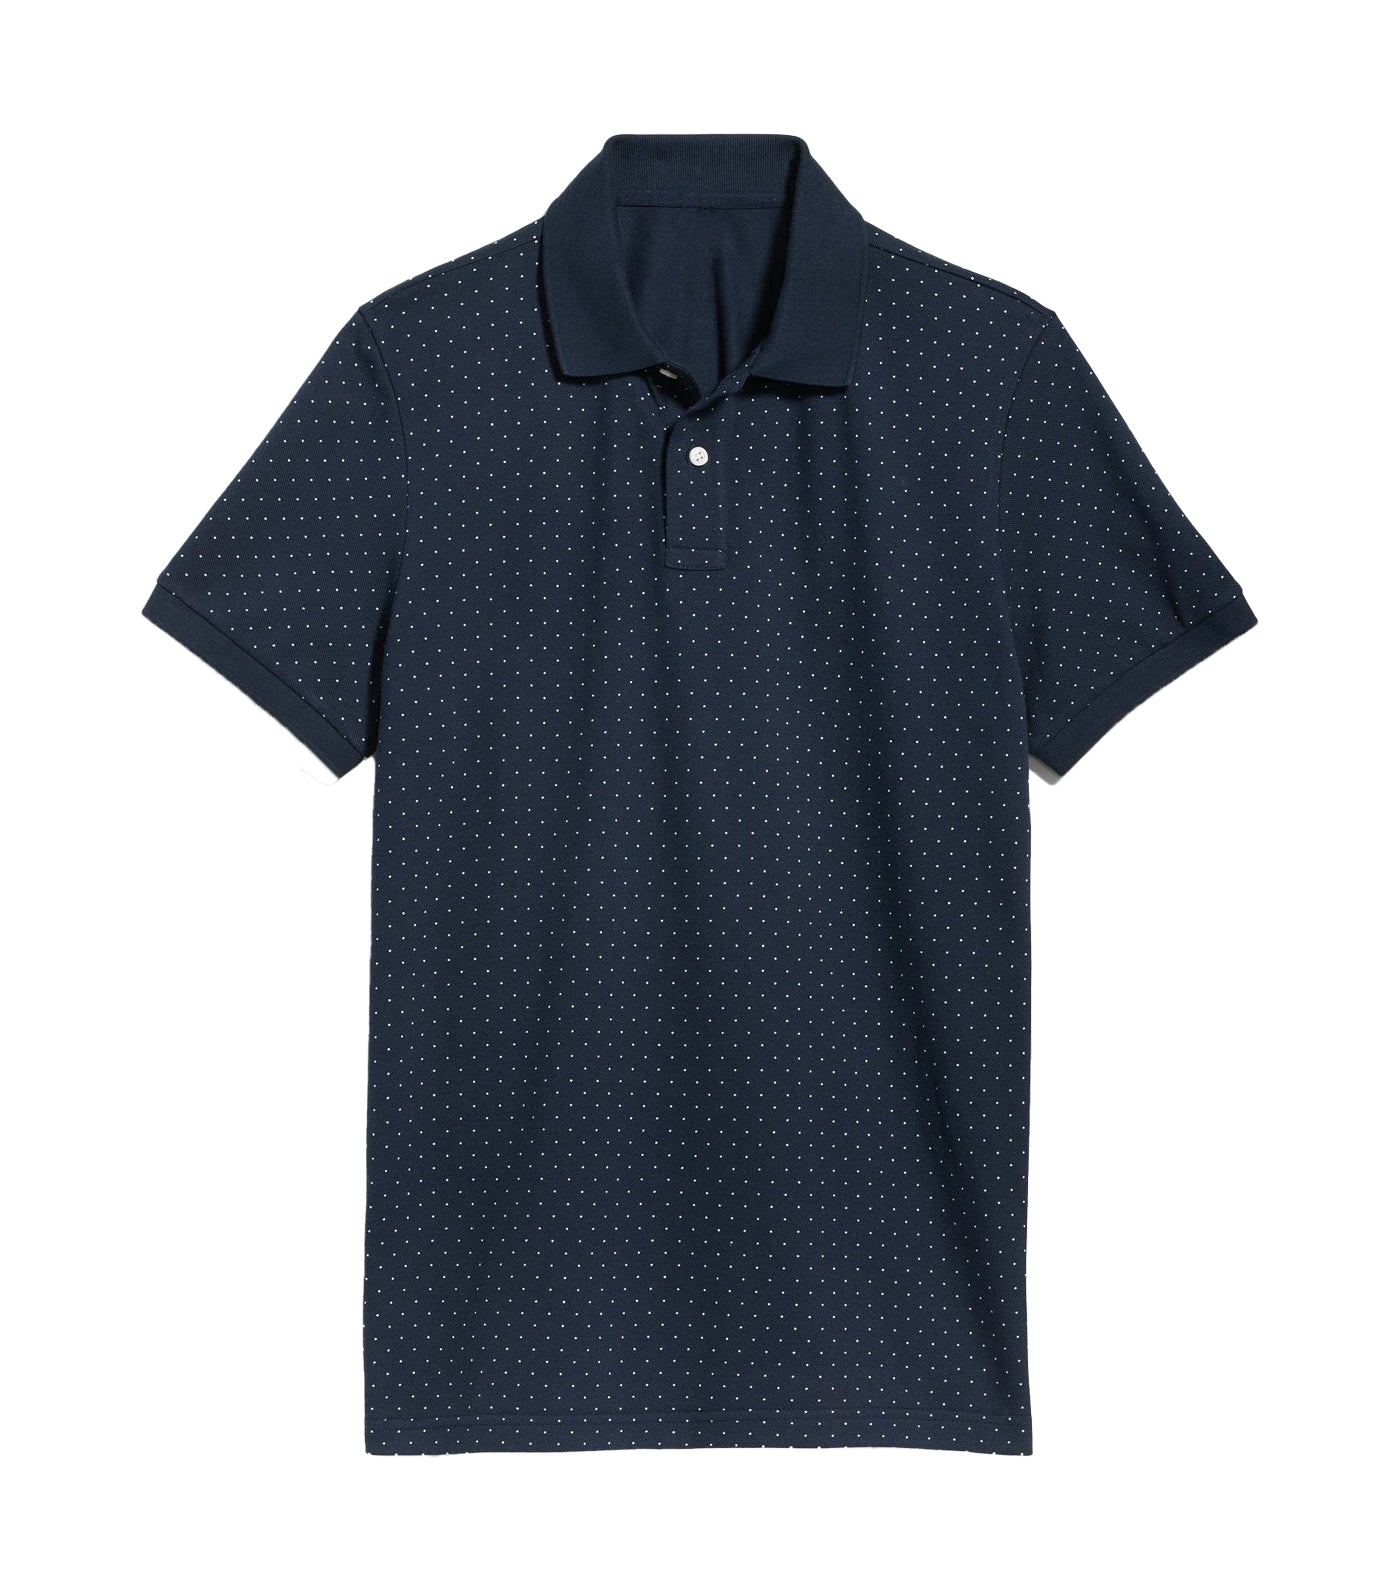 Moisture-Wicking Pique Pro Polo Shirt for Men Navy/White Dot